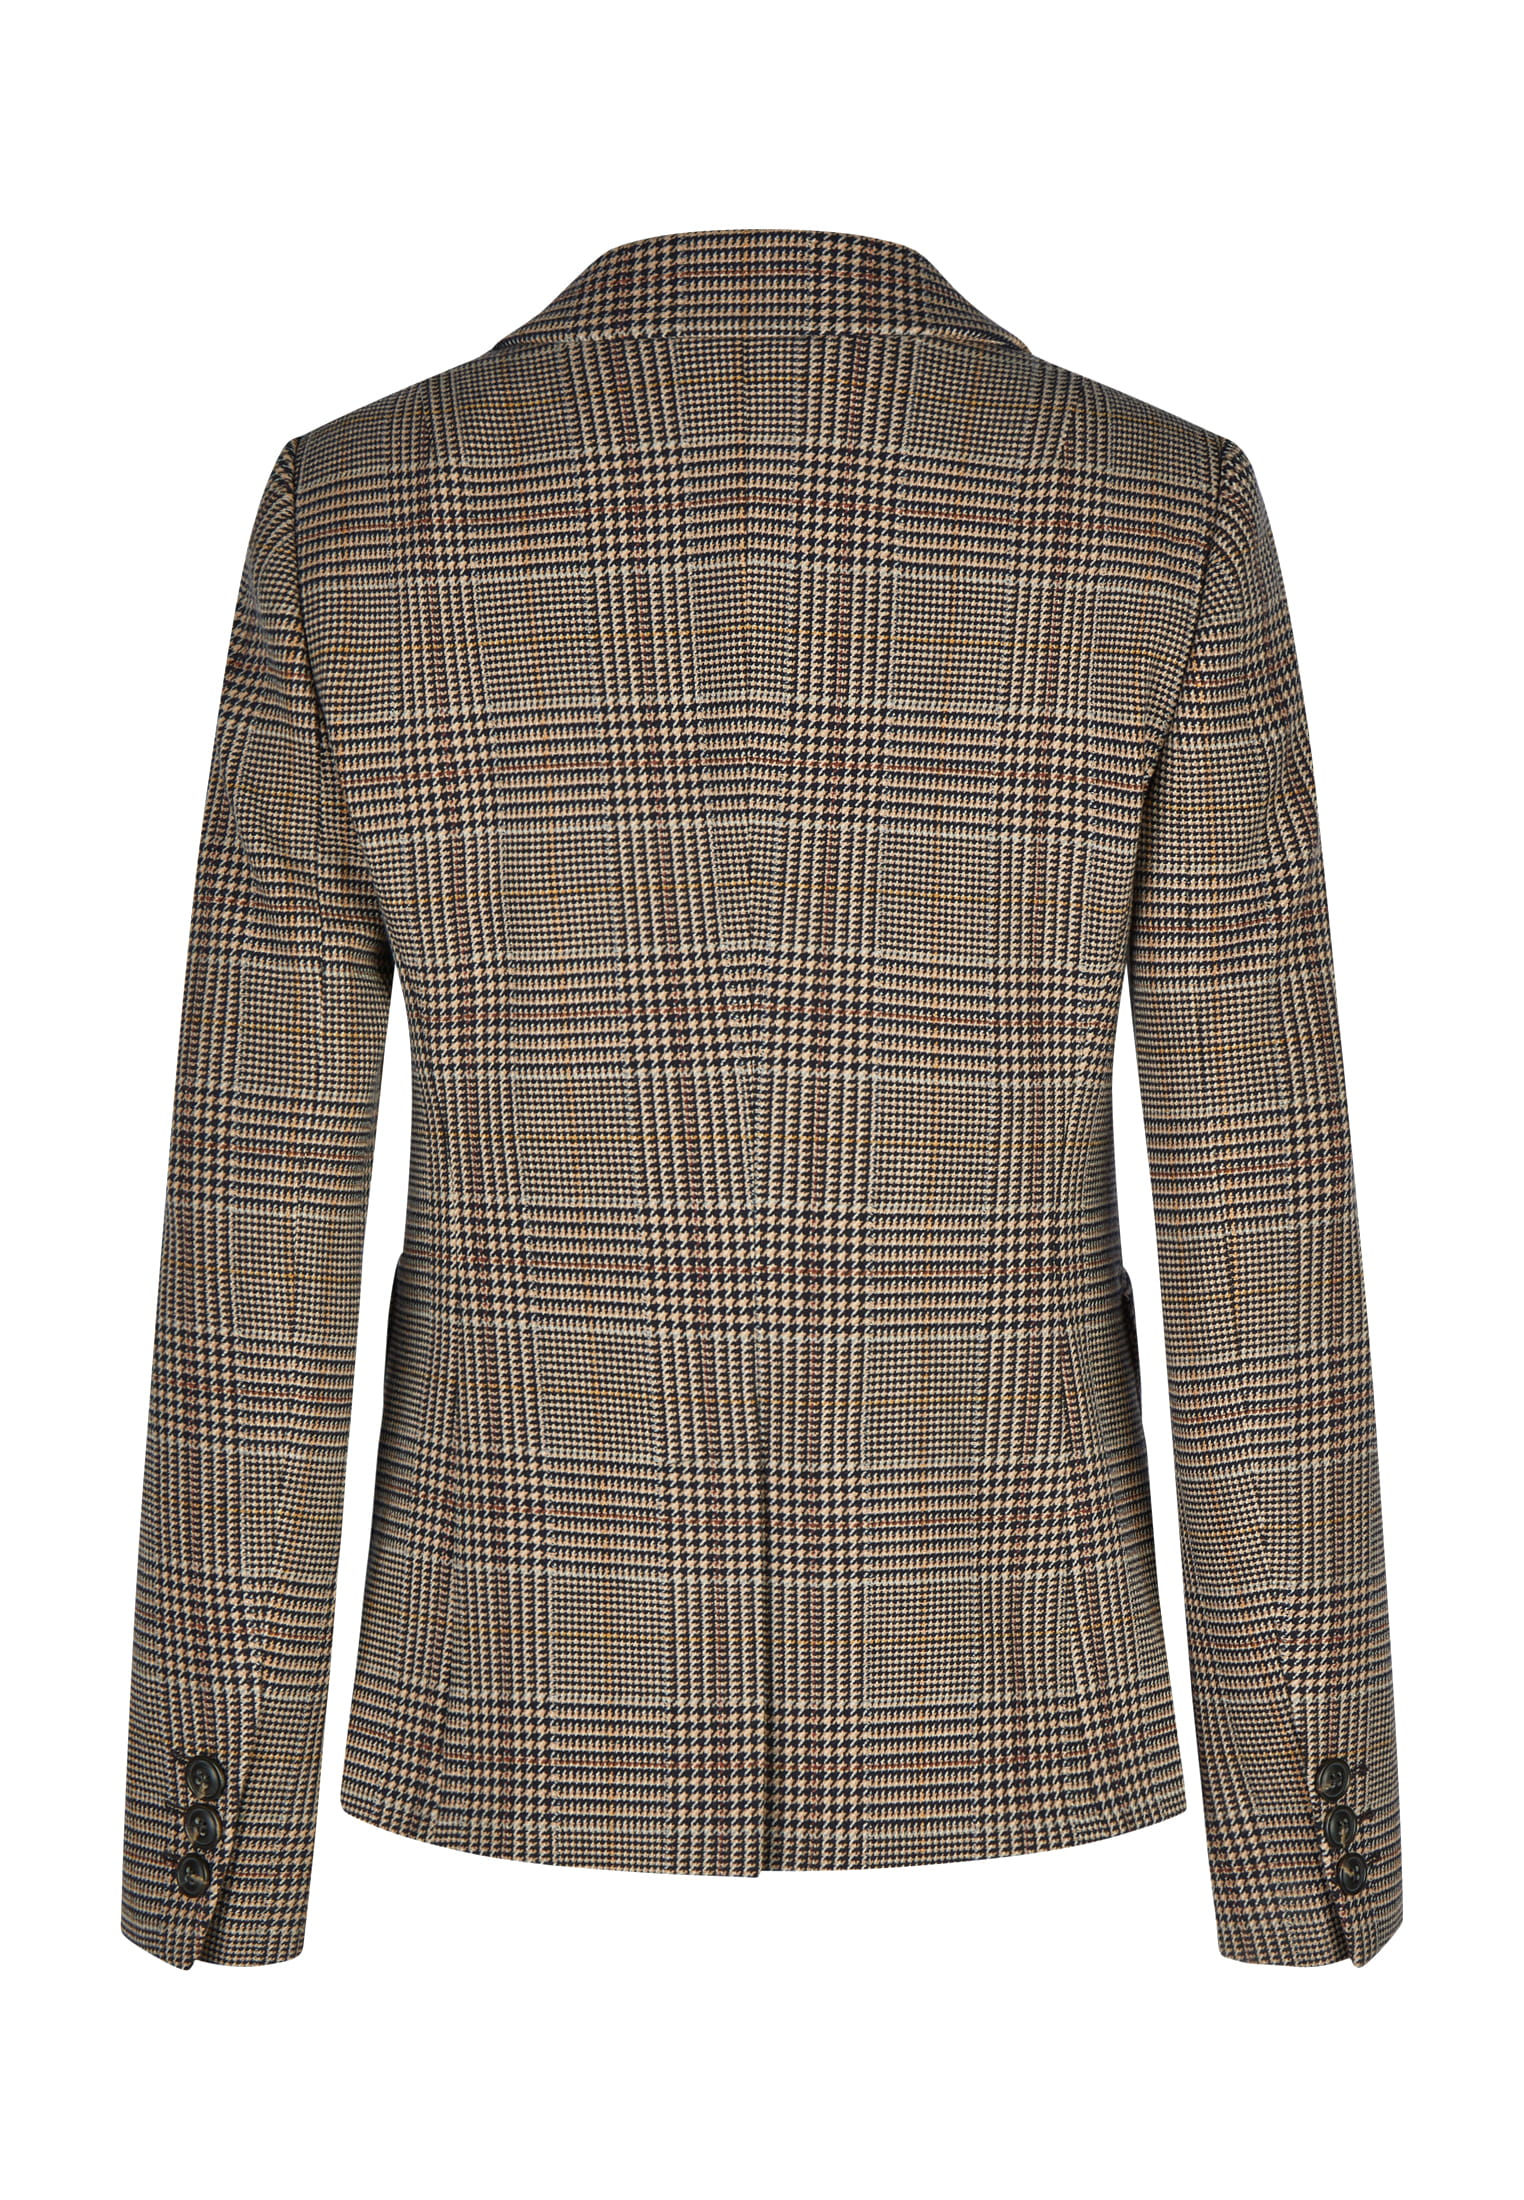 Glencheck blazer made from recycled materials | Blazer & Jackets | Fashion